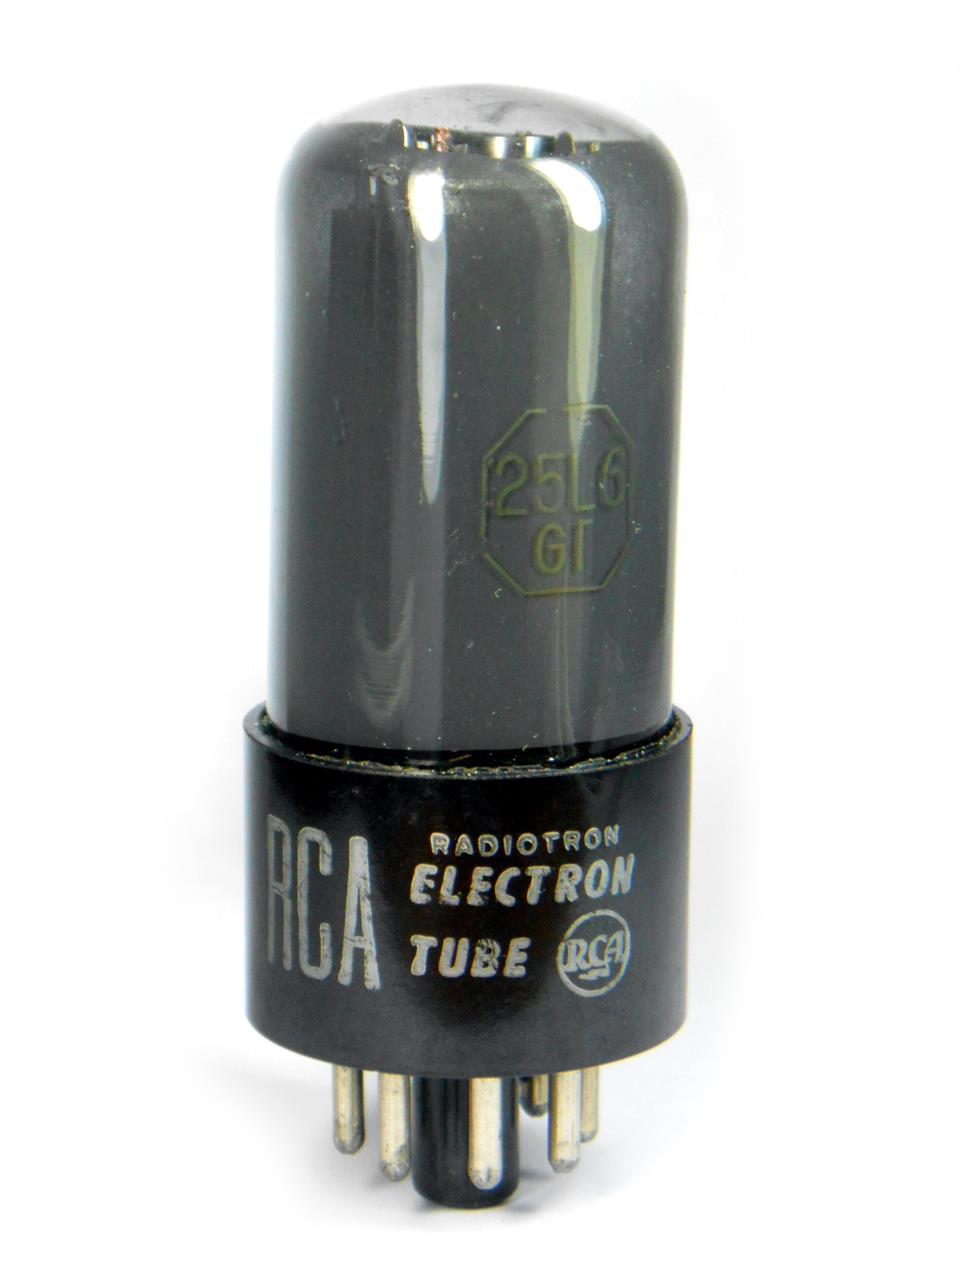 Válvulas eletrônicas 25L6GT e equivalentes - Válvula 25L6GT RCA